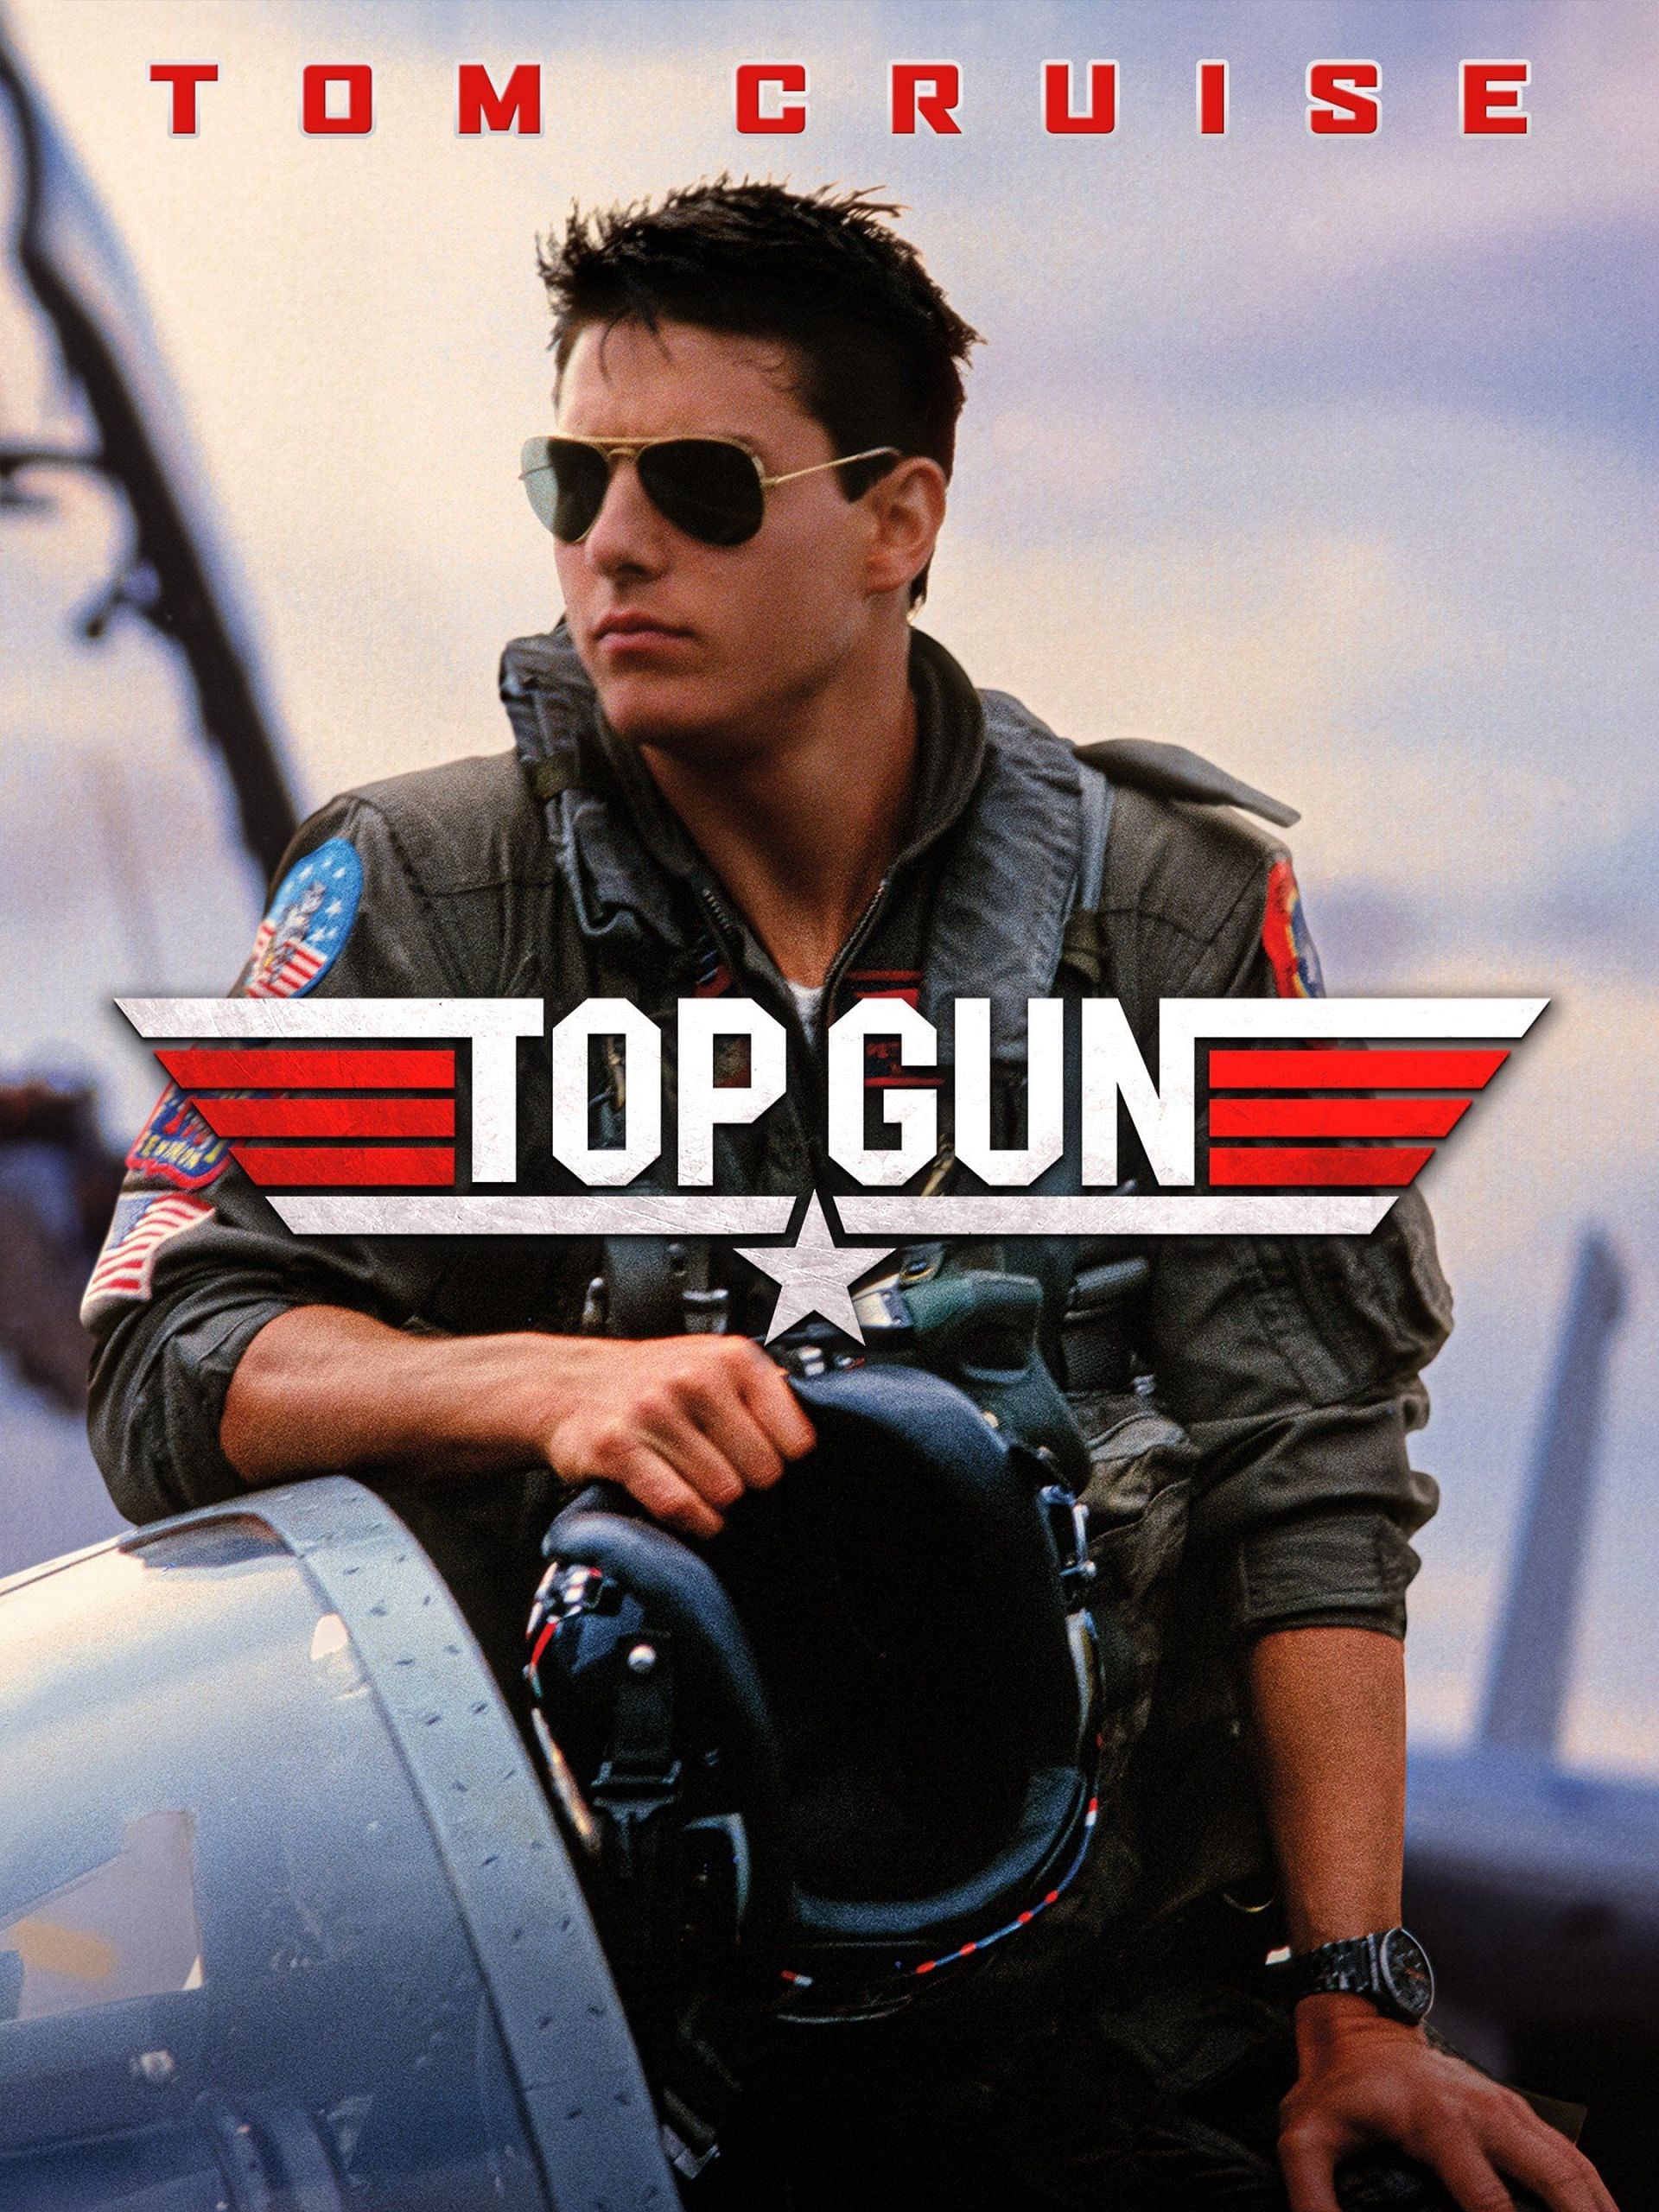 Tom Cruise in Top Gun (image via Paramount Pictures)